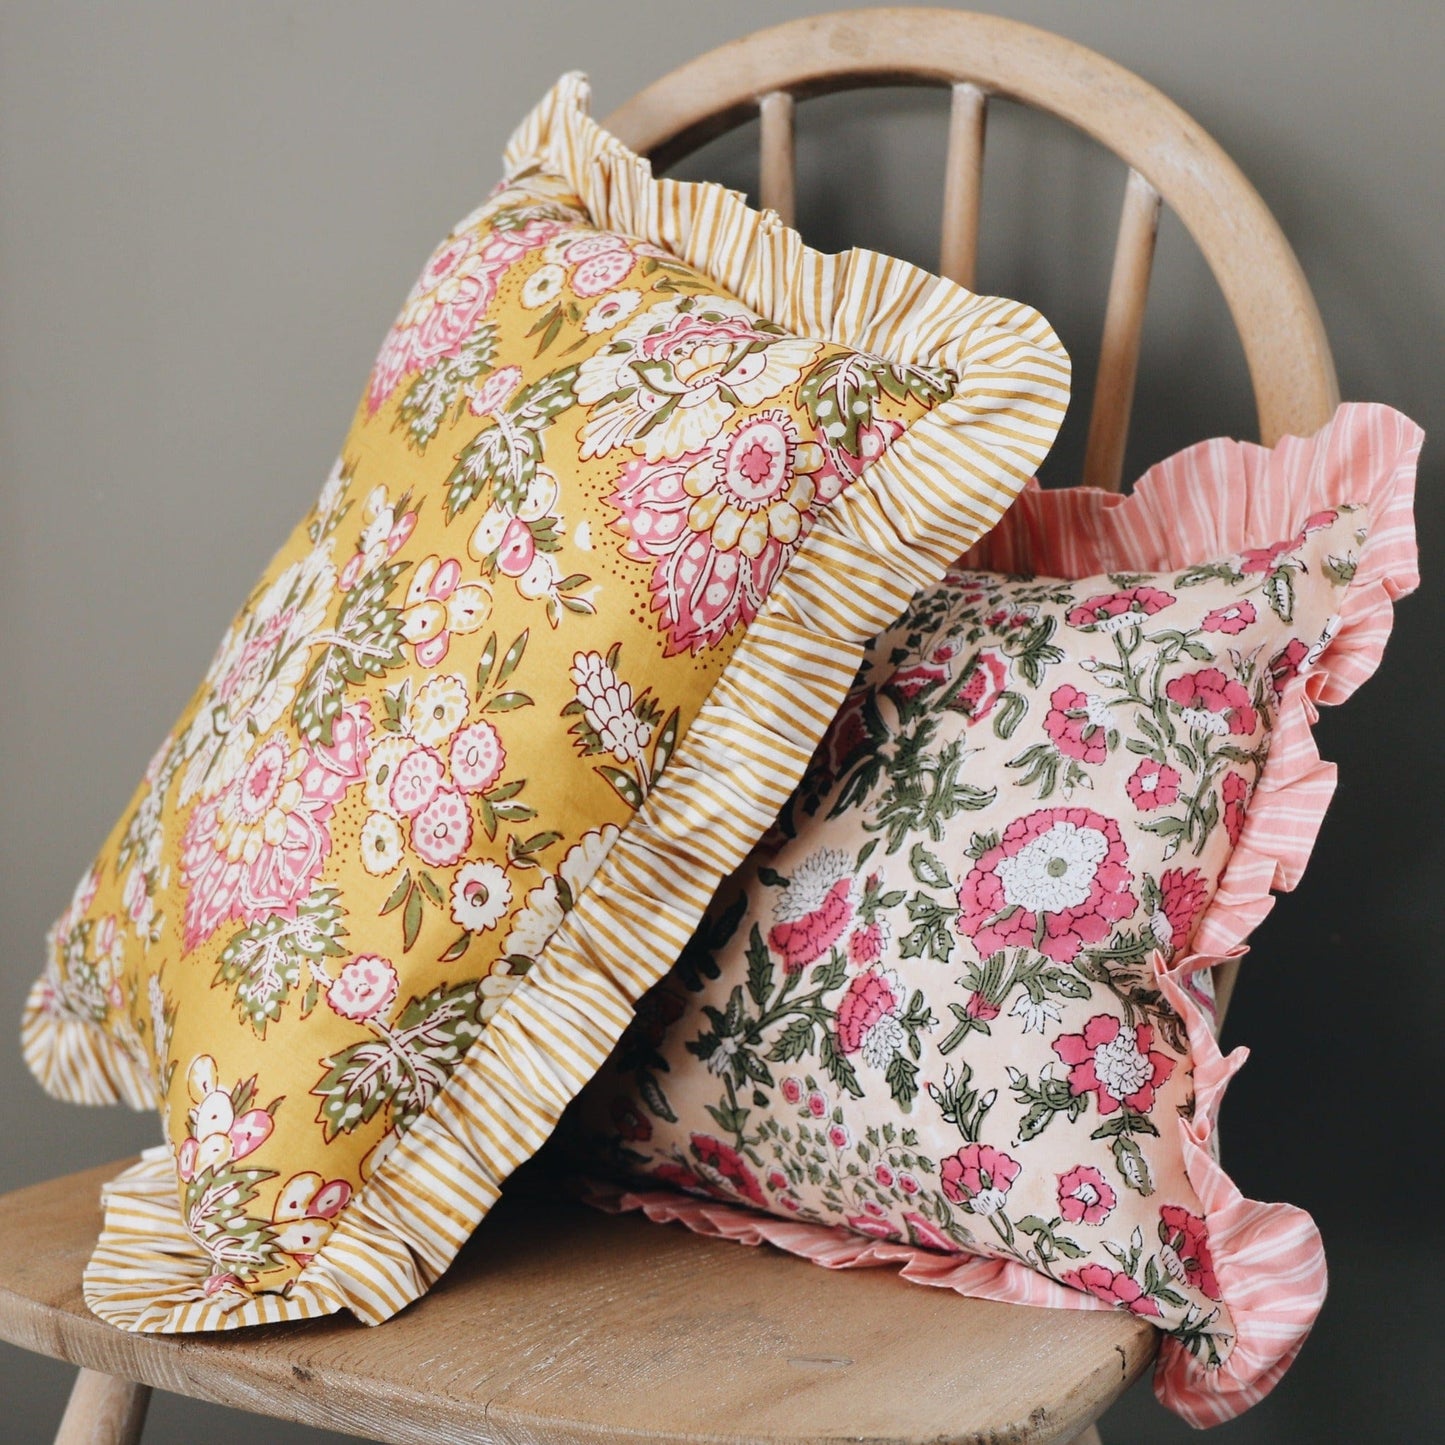 Cushions Small Ruffle Cushion - Pink & Green Flowers on Blush 19478